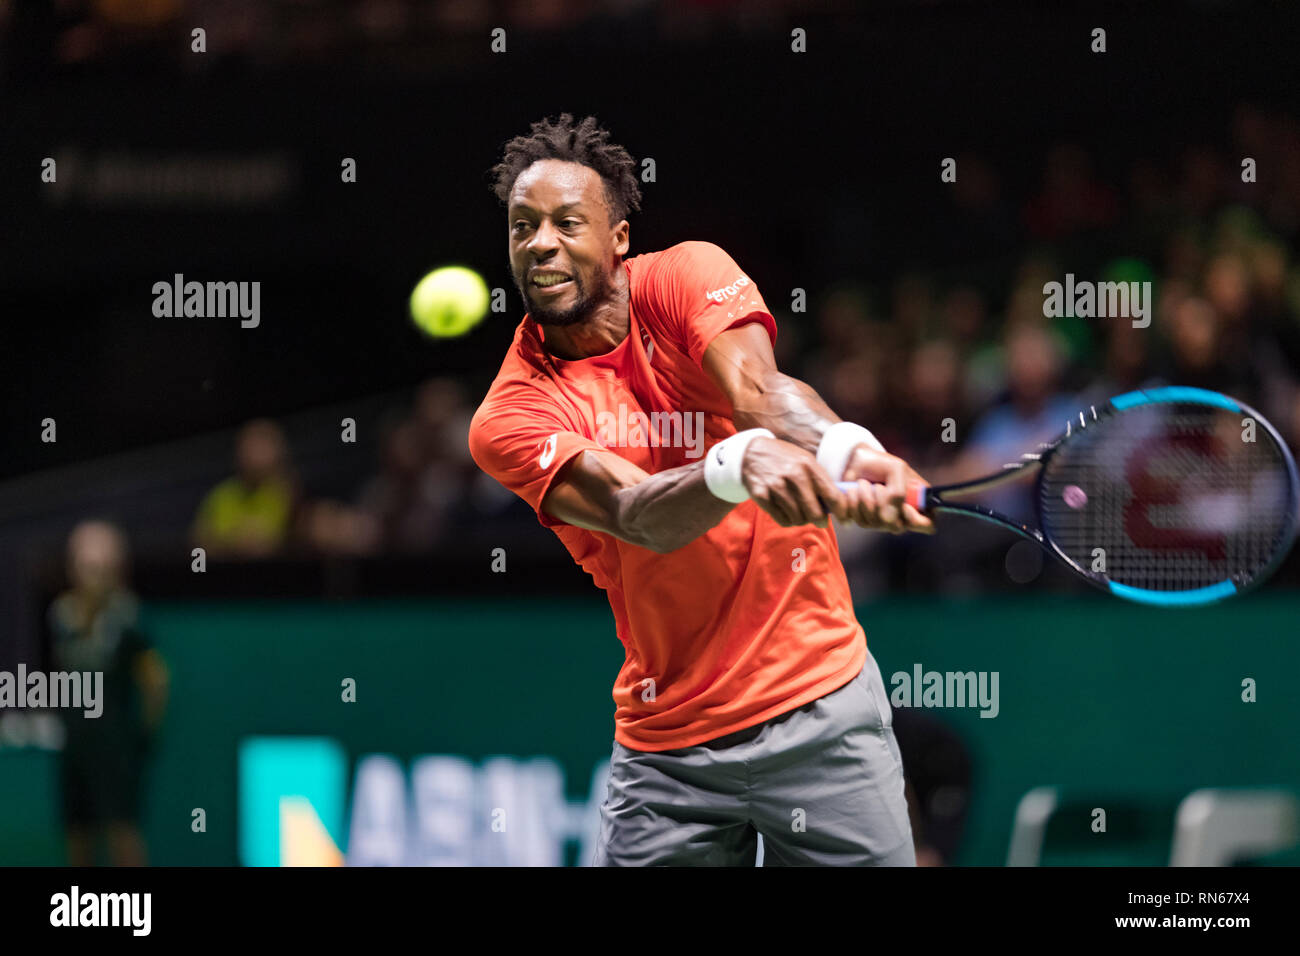 Rotterdam, Pays-Bas. Feb 17, 2019. ABNAMRO World Tennis Tournament, Ahoy, Final, GAEL MONFILS (FRA), Crédit : Henk Koster/Alamy Live News Banque D'Images